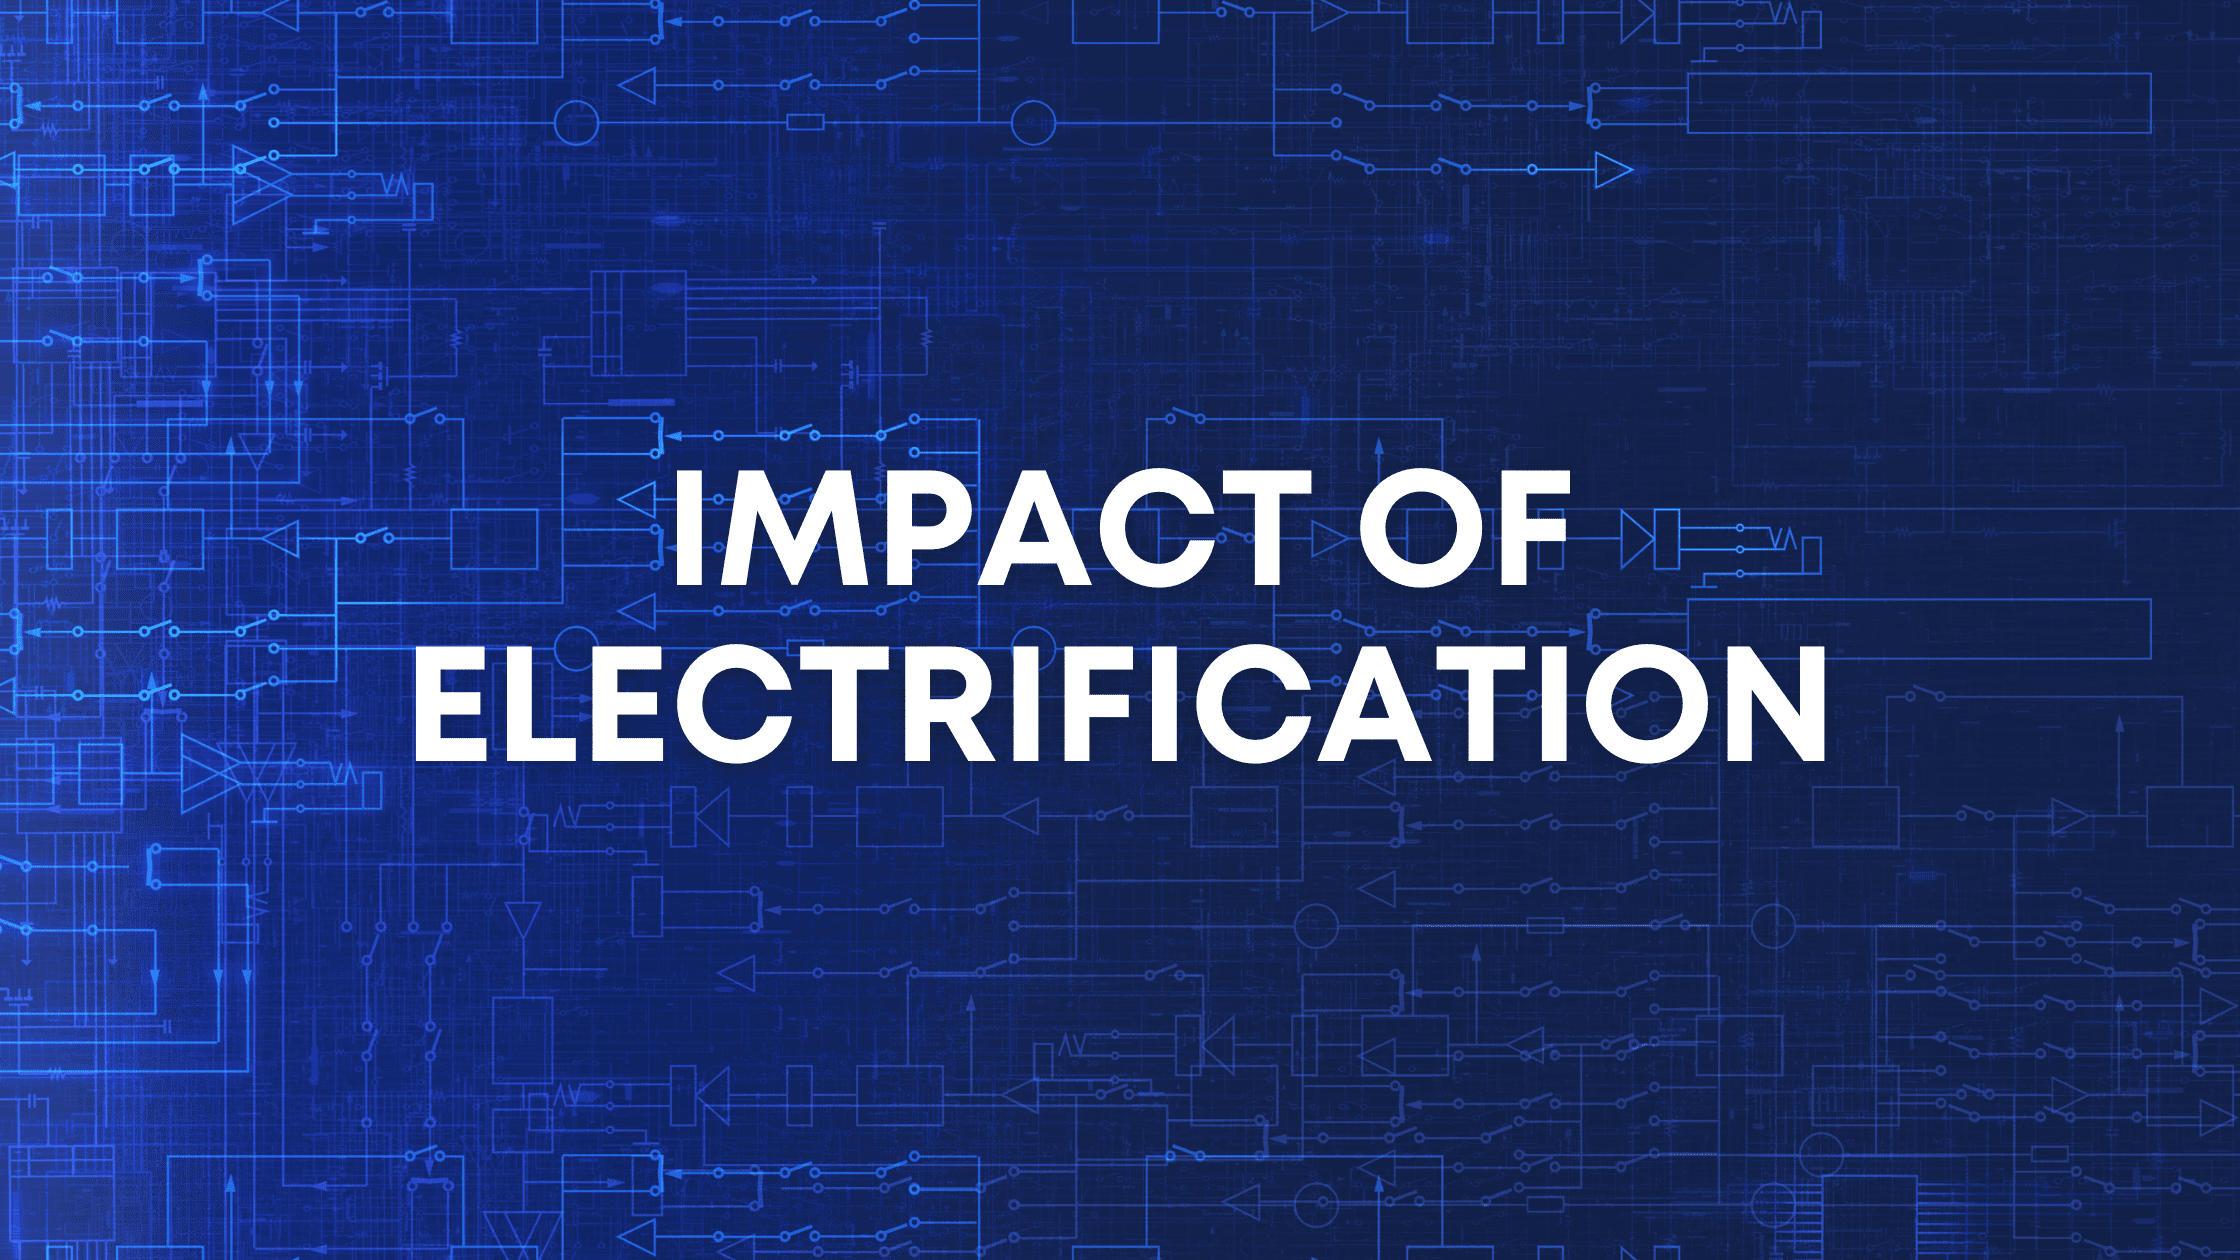 electrification hvac industry